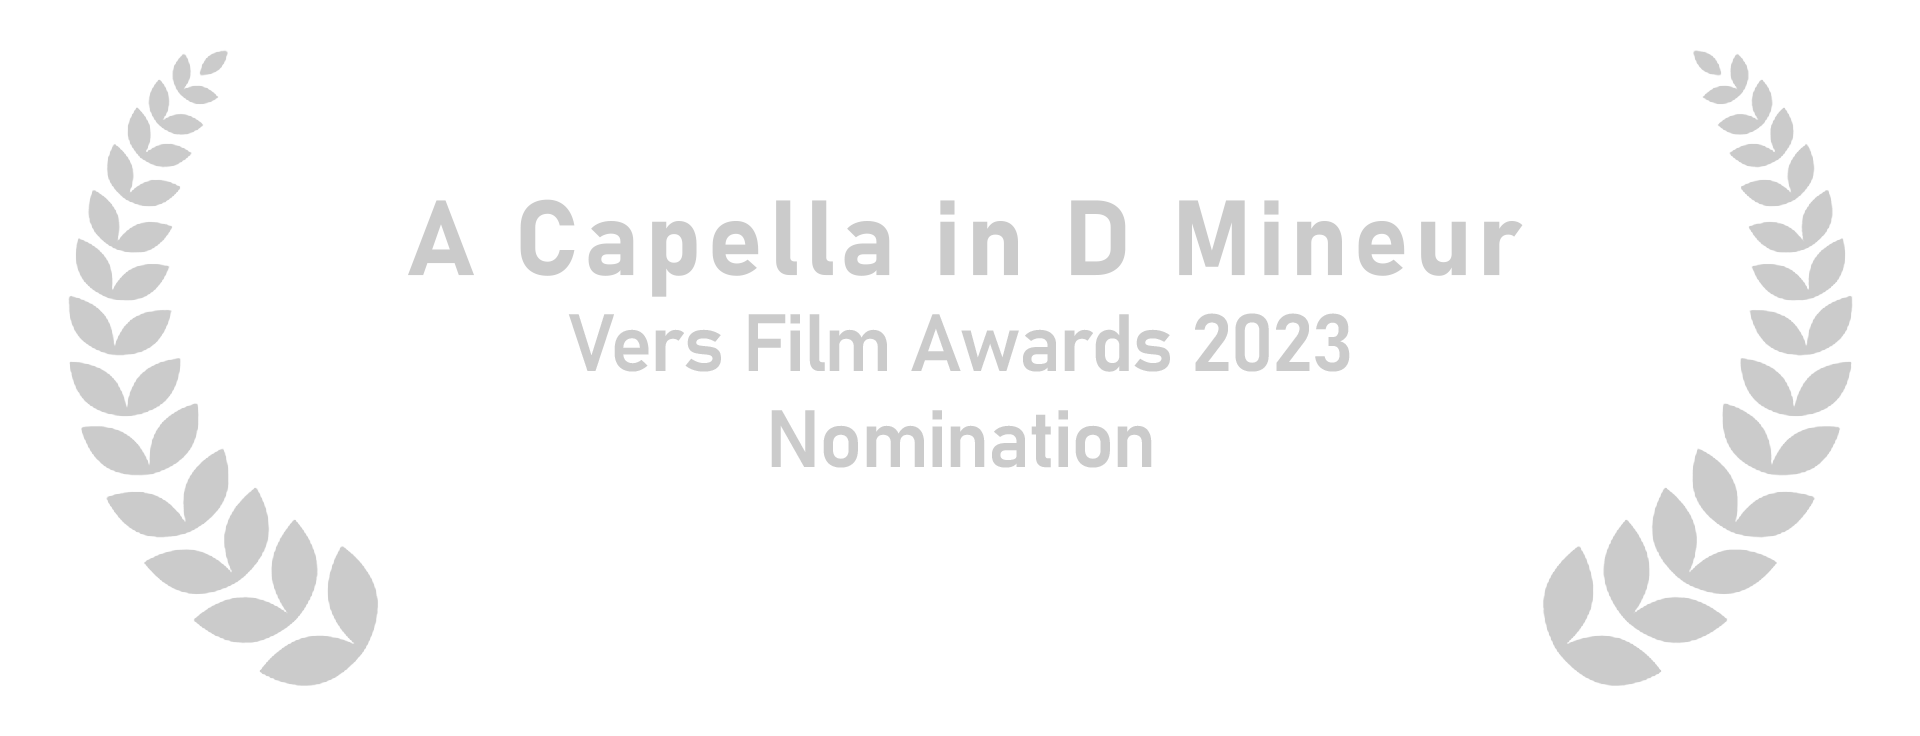 A Capella in D Mineur Vers Film Awards 2023